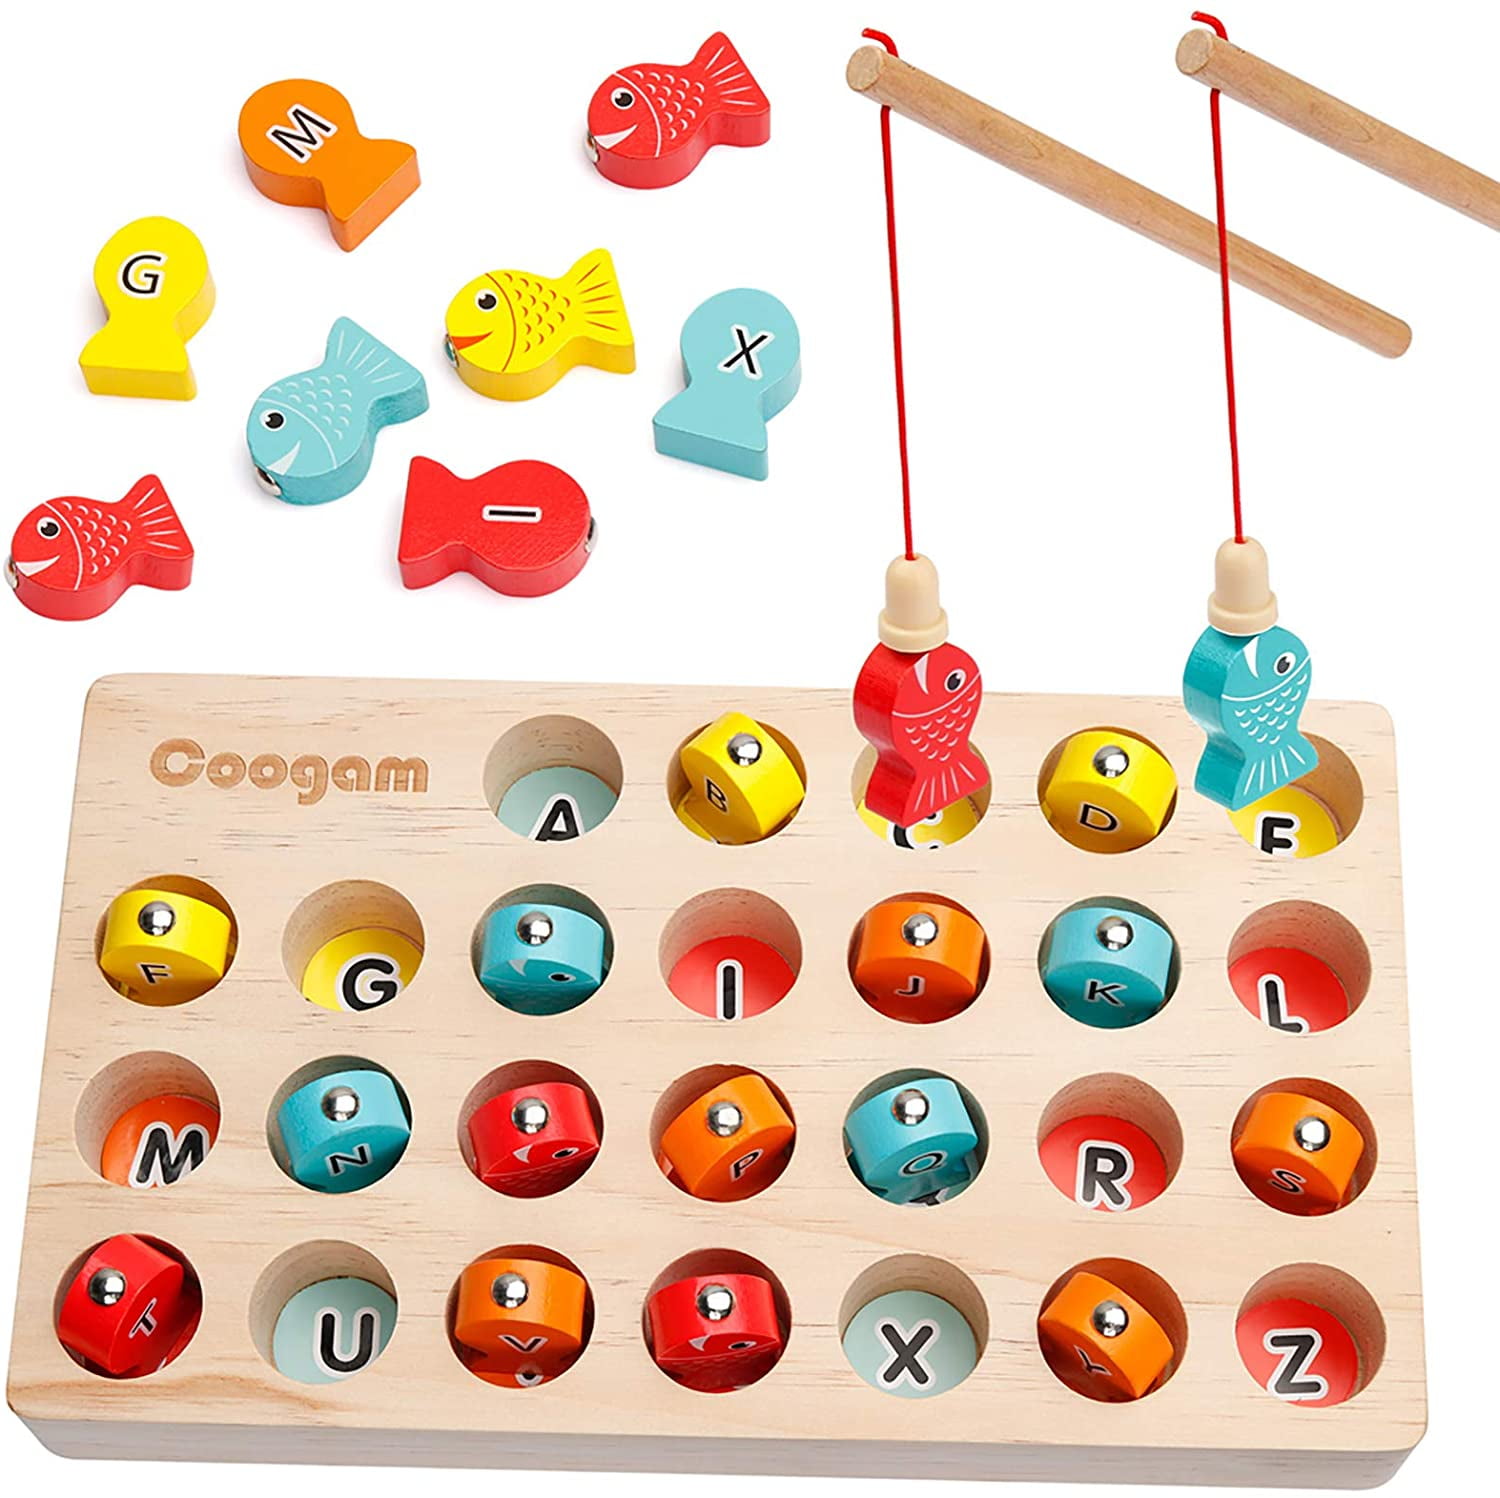 Dvkptbk 2 In 1 Fishing Game 30 Pcs Wooden Magnetic Alphabet Letter Fishing Toy For Kids Multicolor